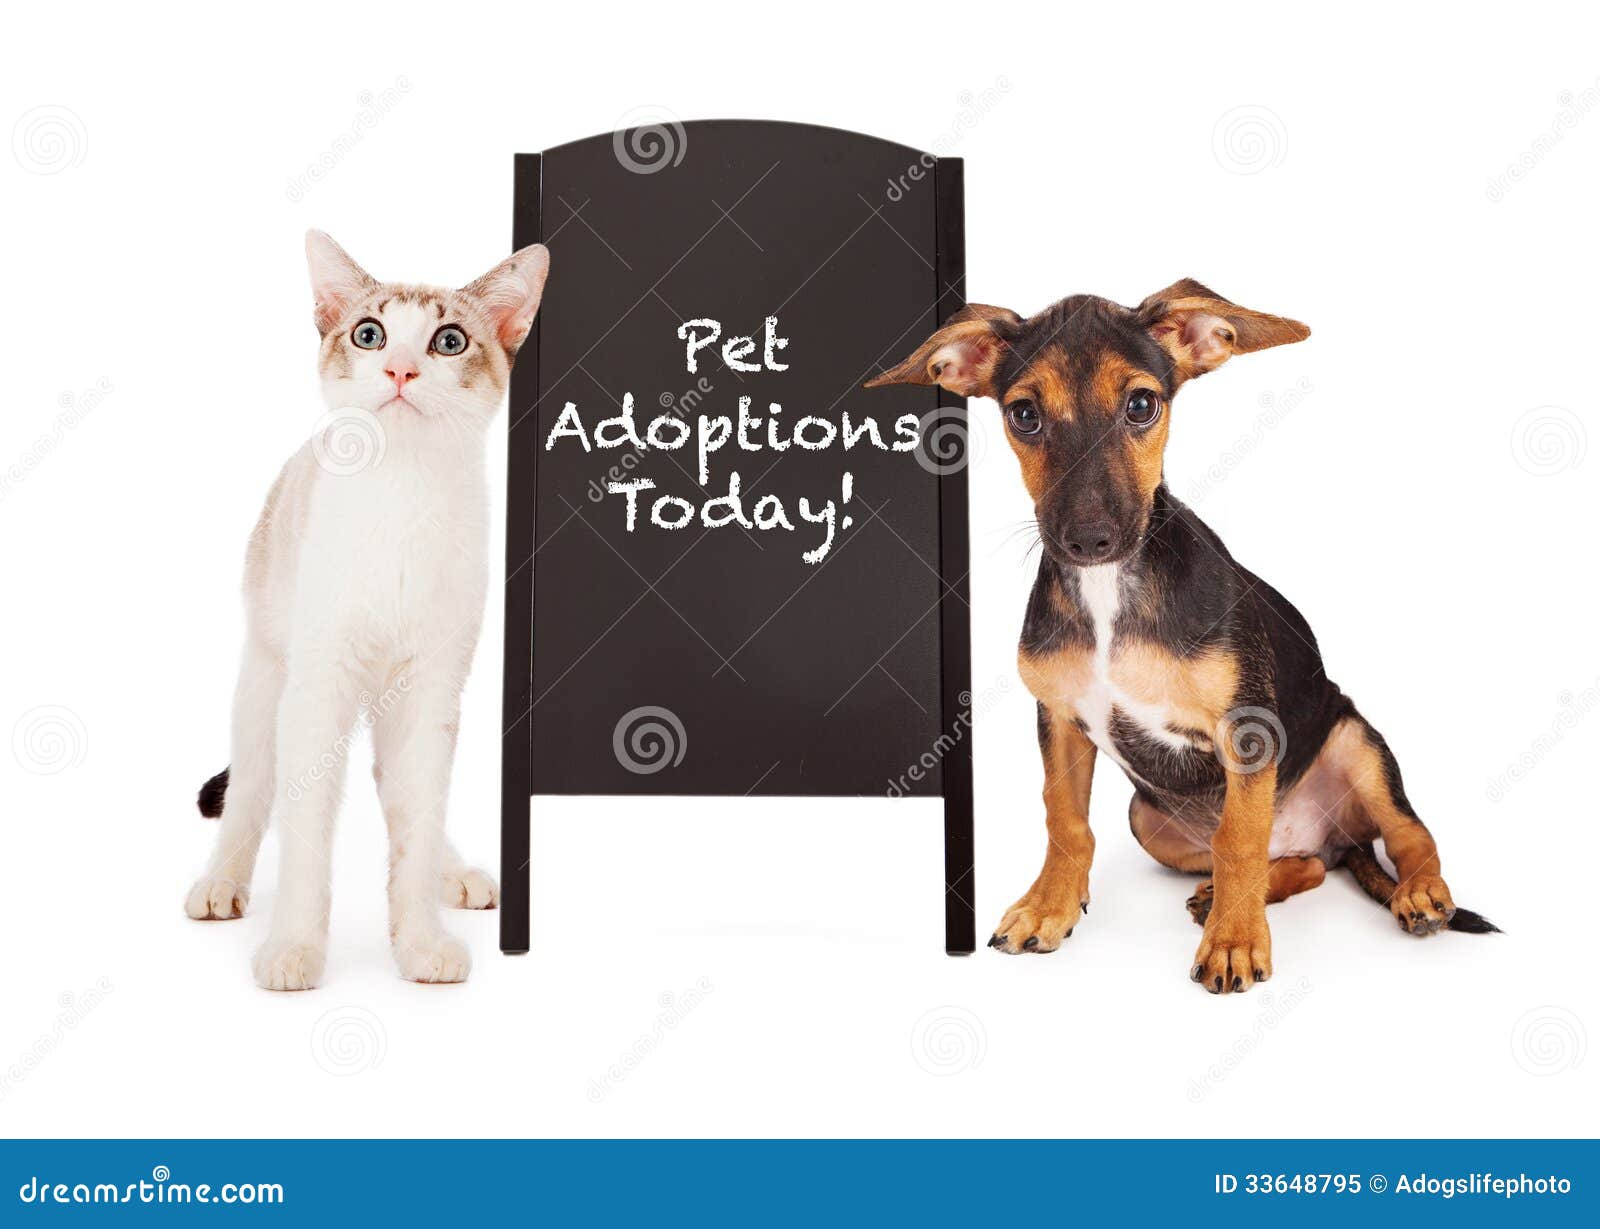 dog and cat with pet adoption sign